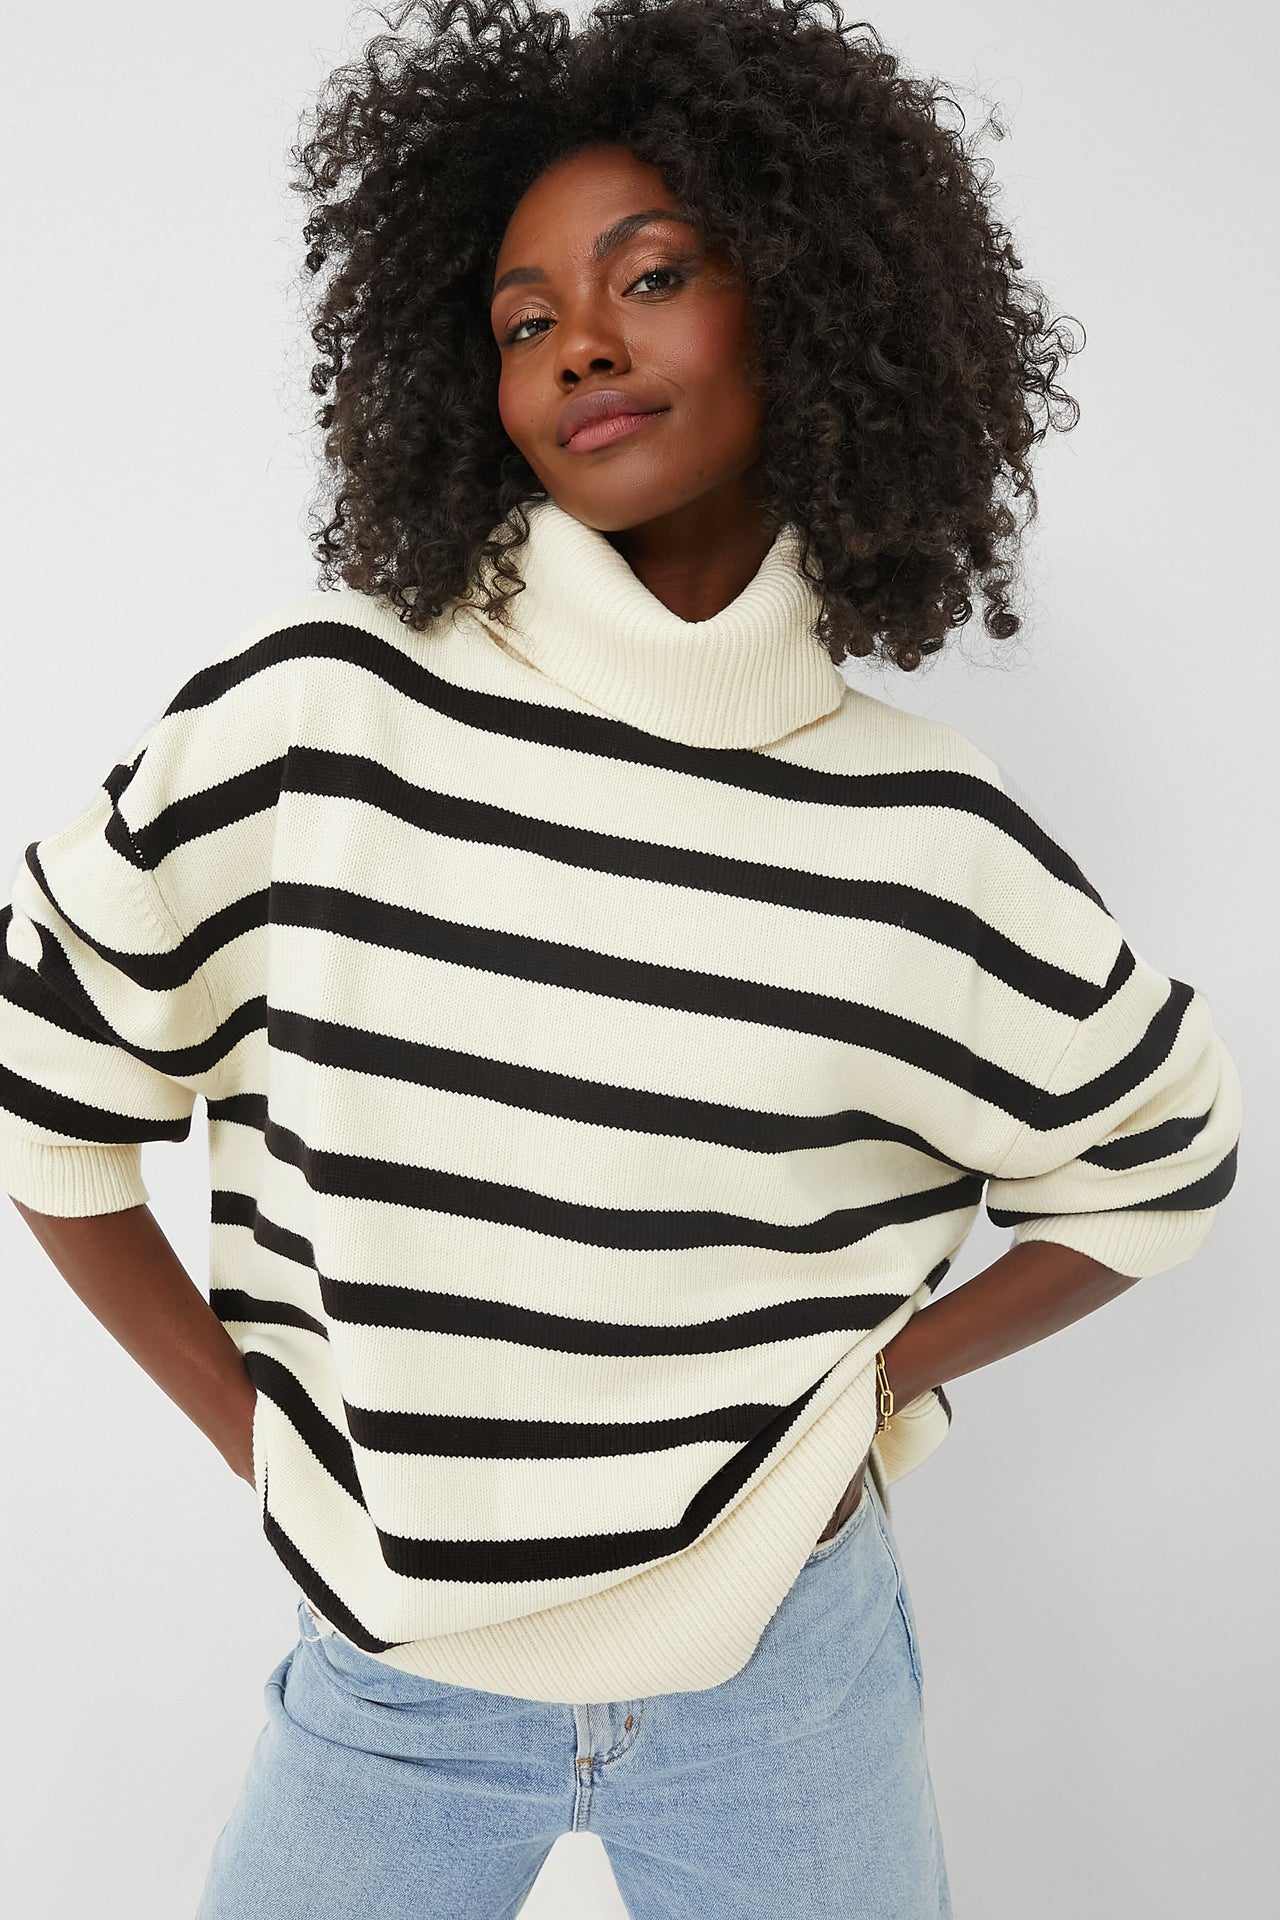 WEWOREWHAT Striped Turtleneck Sweater